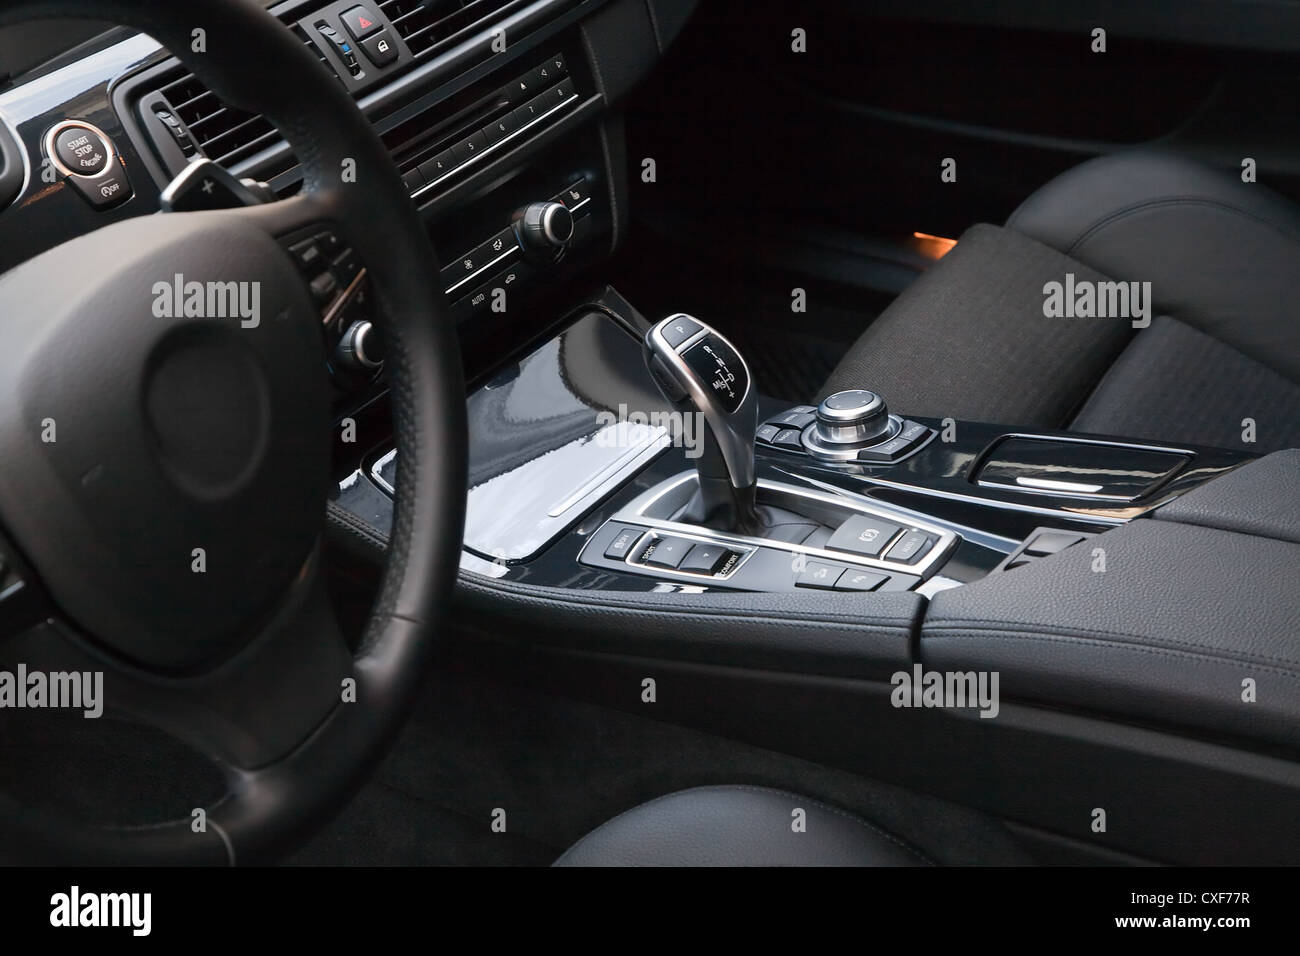 Neue moderne Sport-Auto-Innenausstattung Stockfotografie - Alamy